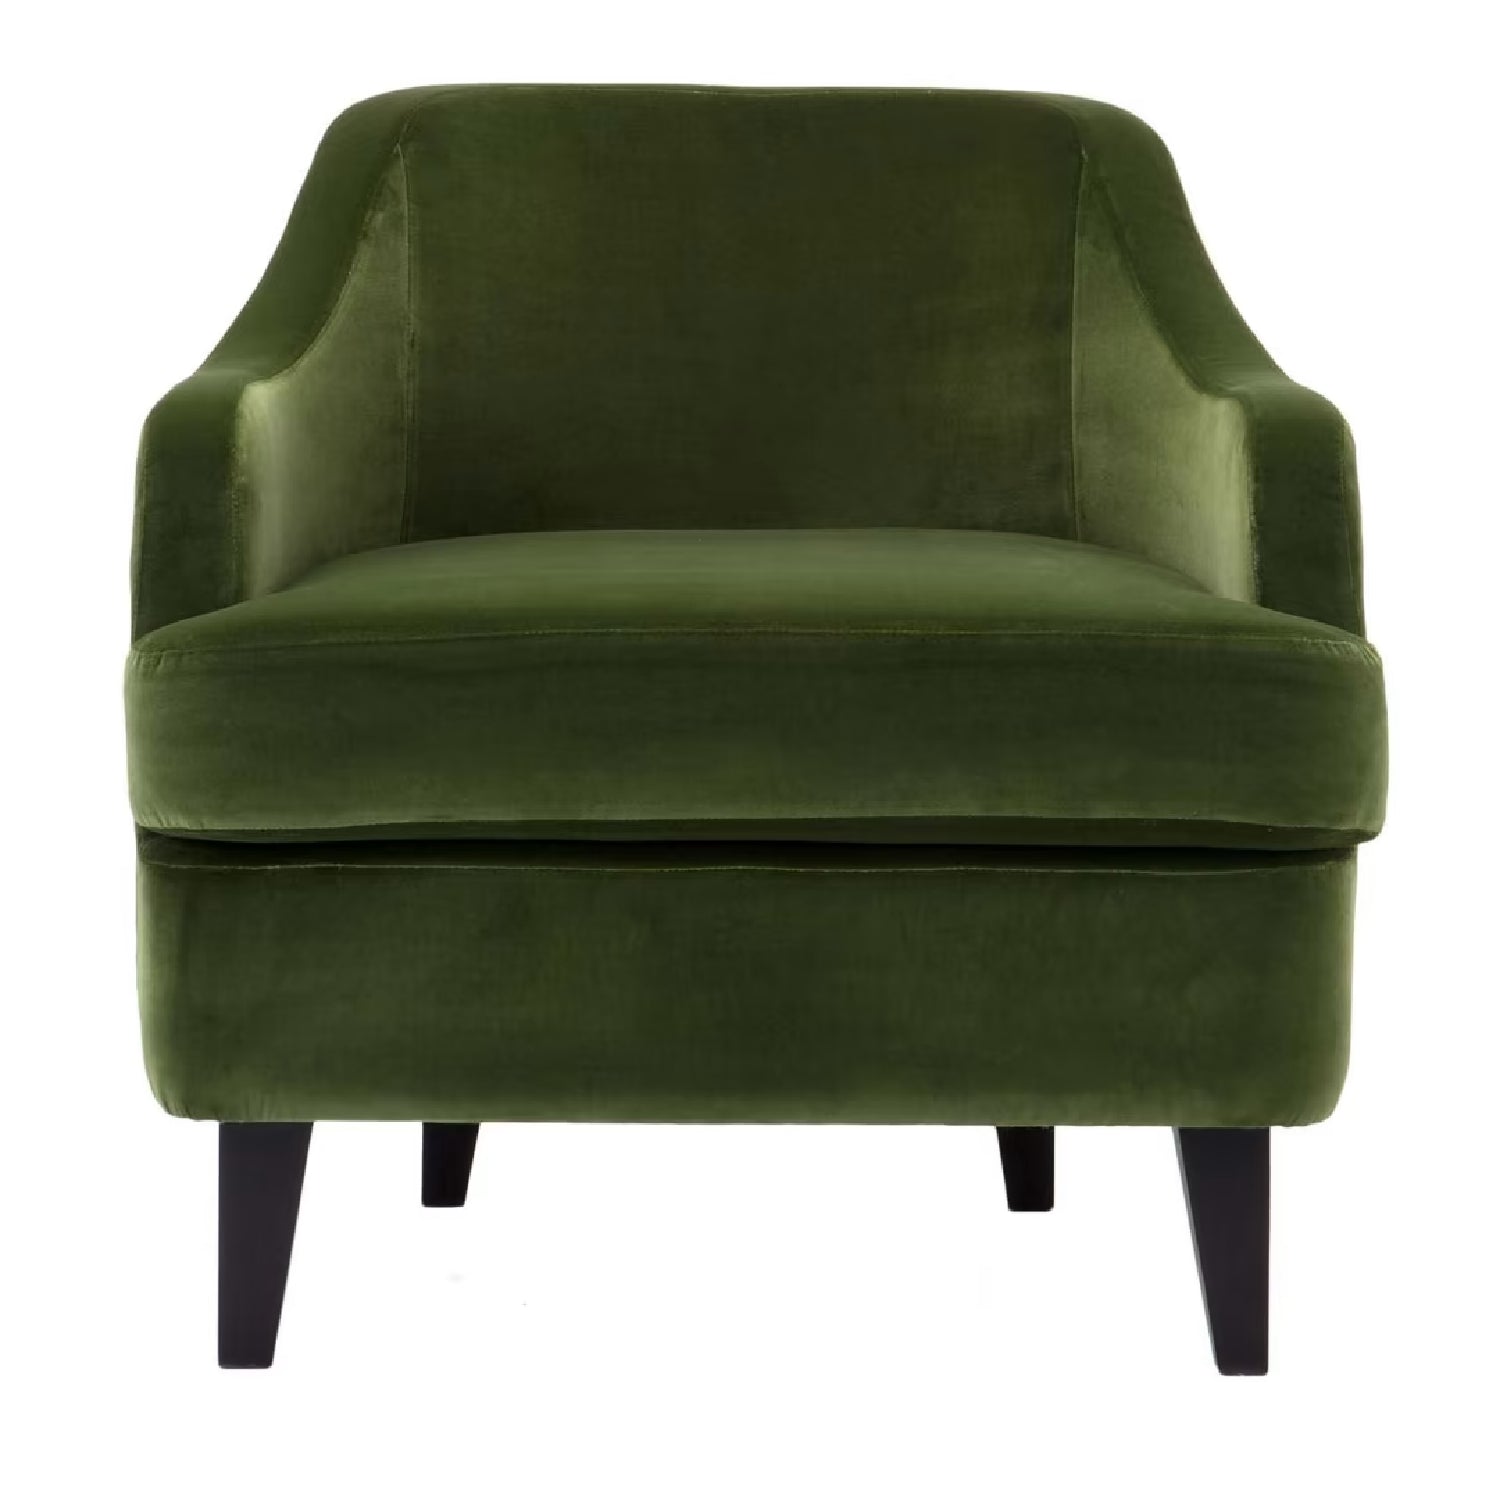 Nor Green Armchair by Domingo Salotti